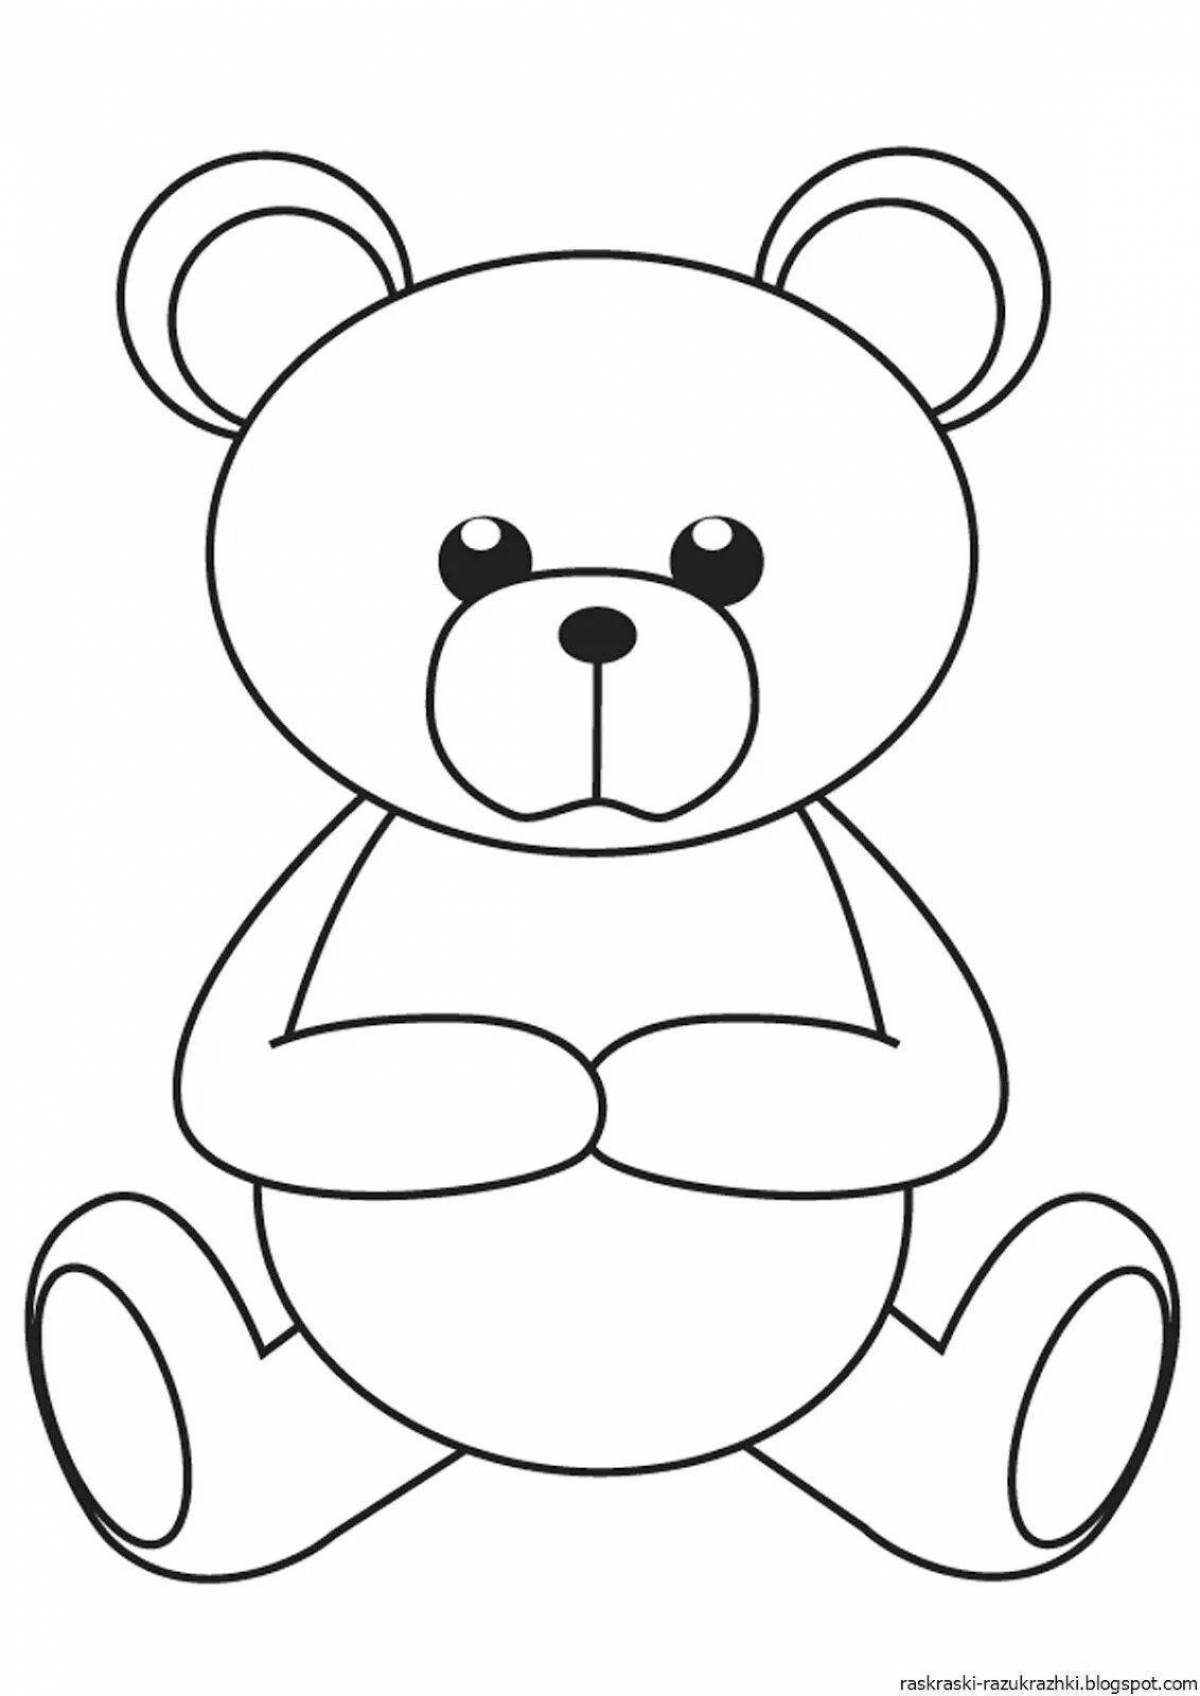 Fun teddy bear coloring book